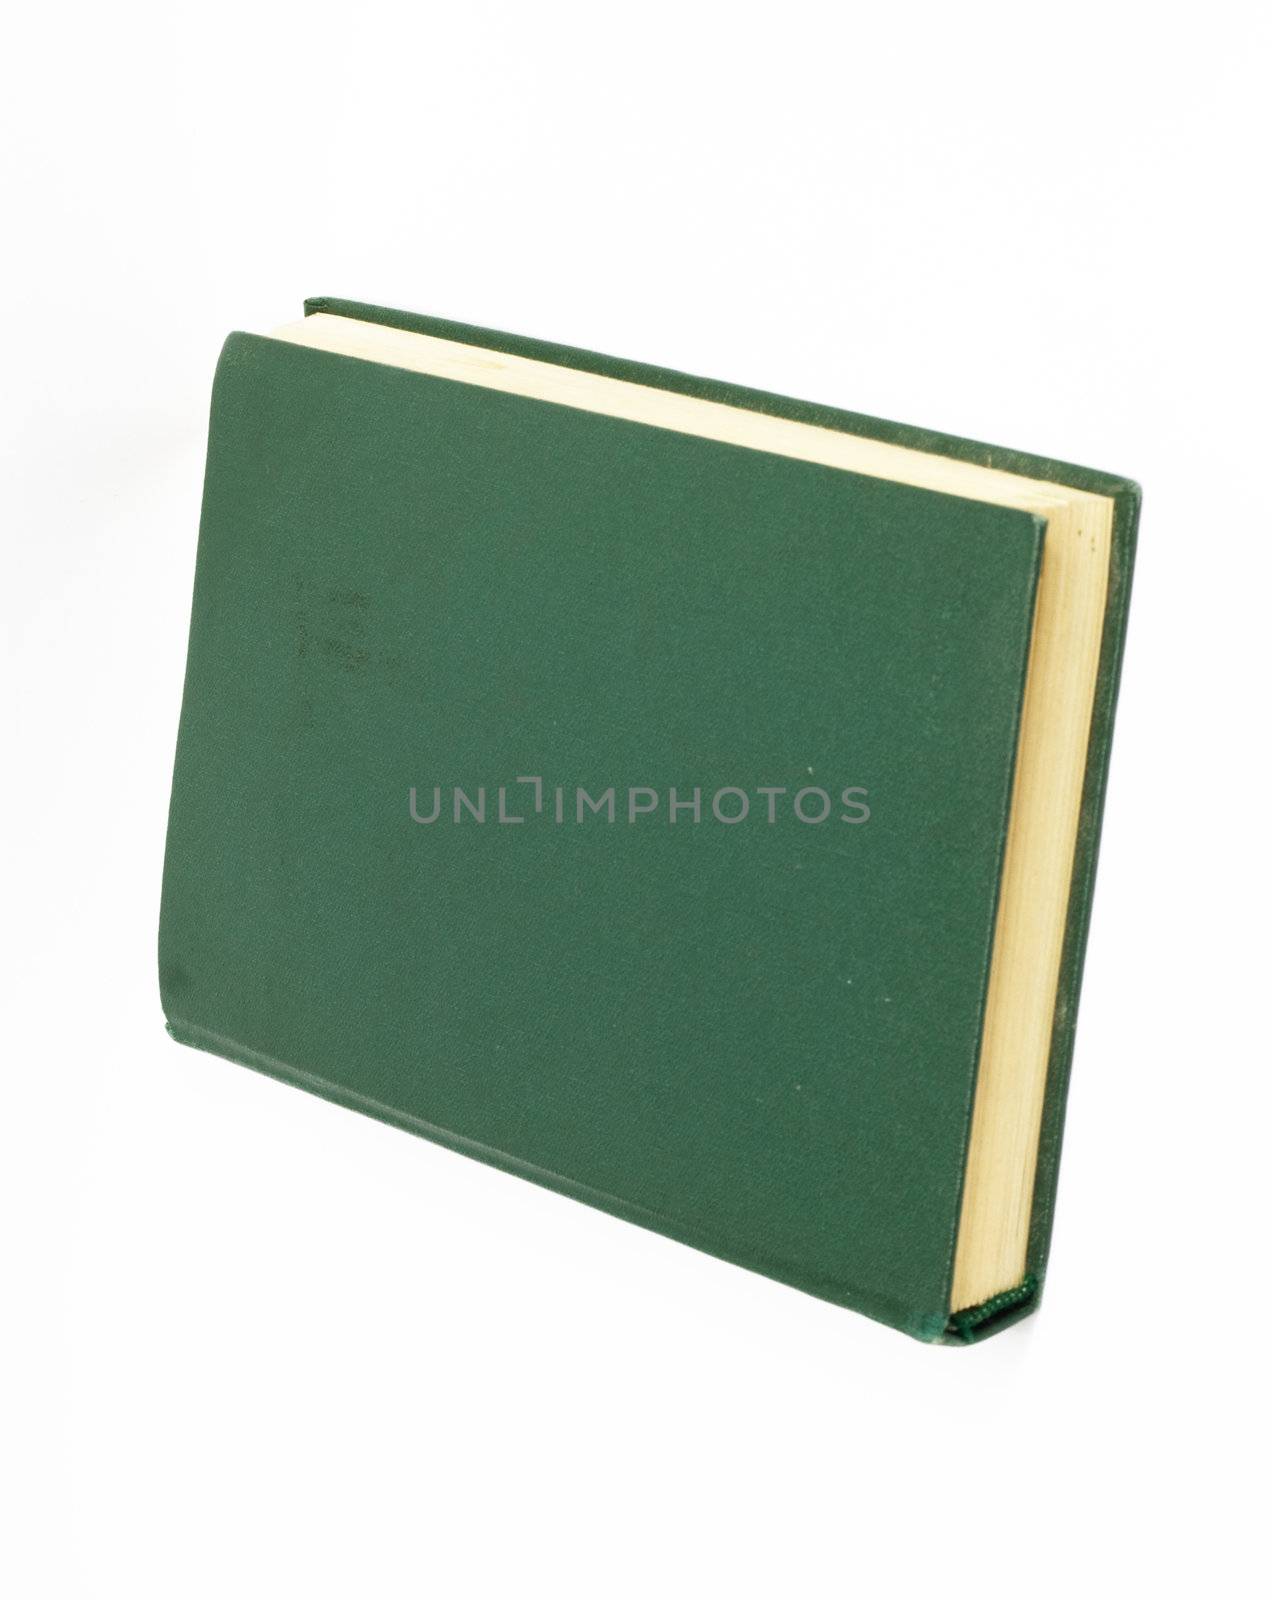 green book by schankz